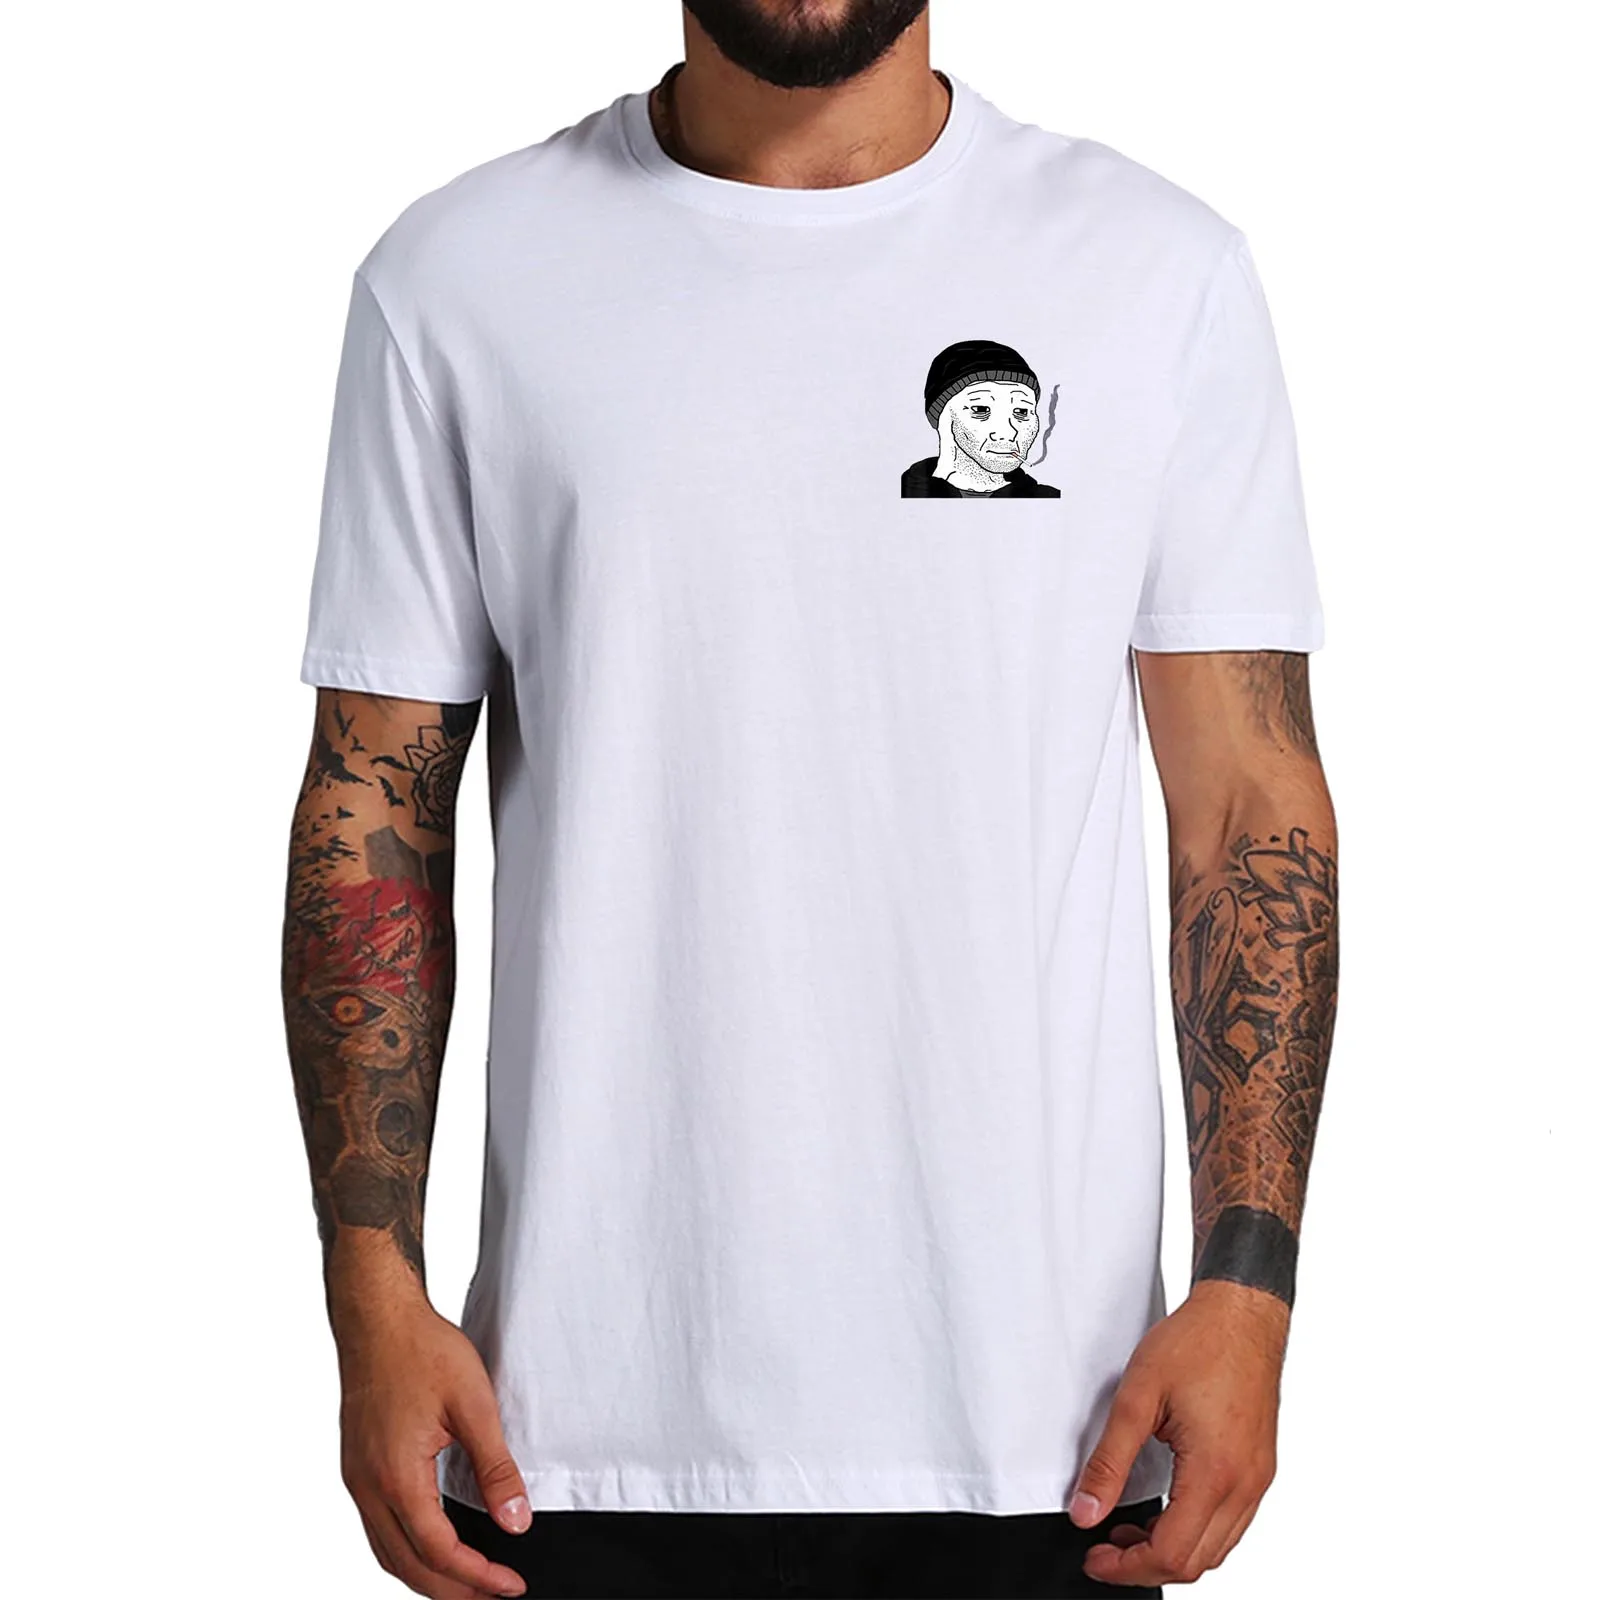 

Doomer T Shirt Introverted Geek Nerd Introverts Gift Graphic T-shirts 100% Cotton O-neck Summer Unisex Tee Tops EU Size